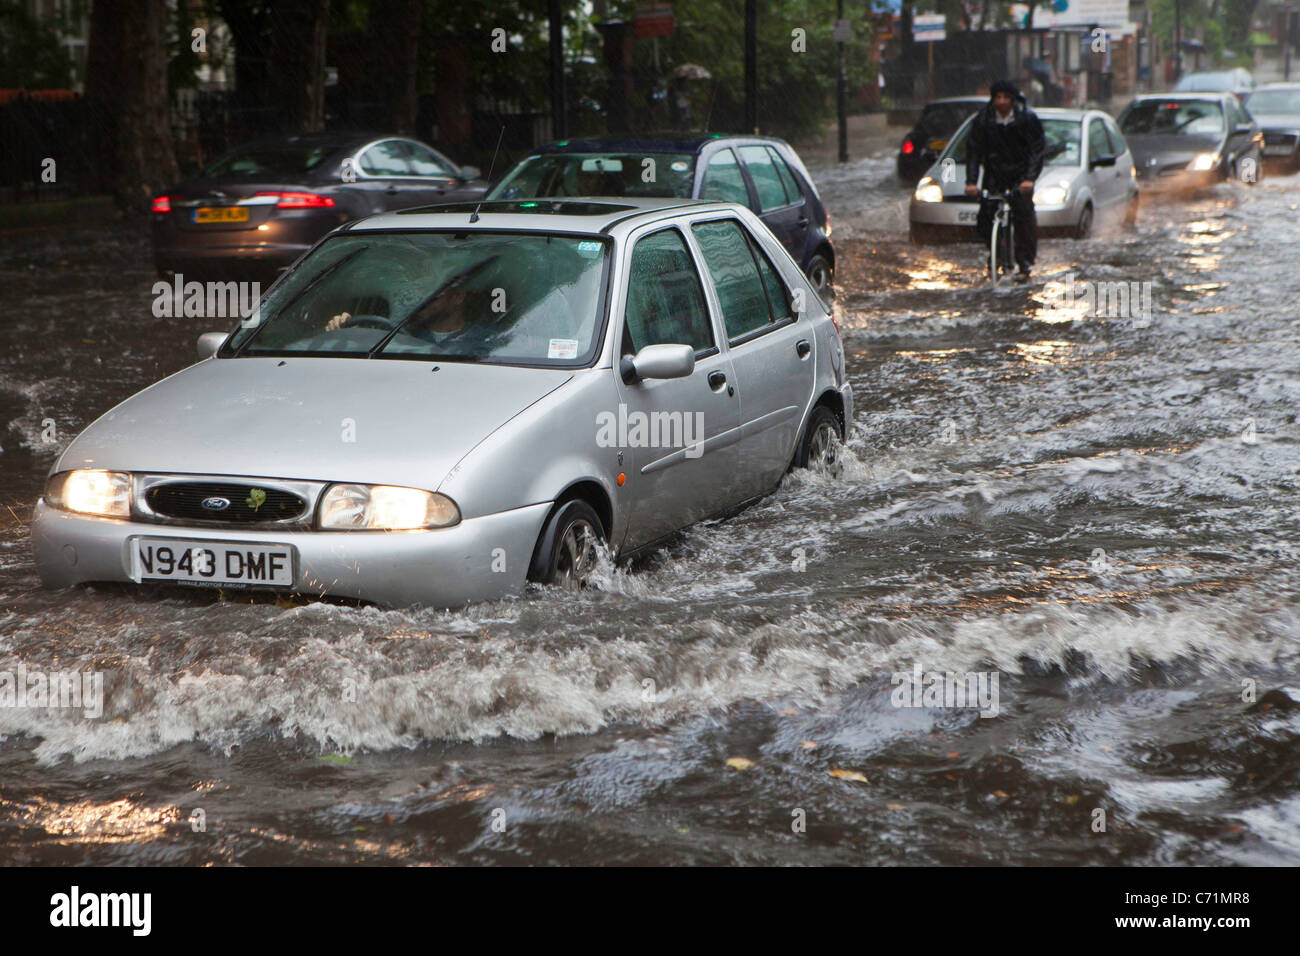 Heavy rain causes flash flooding in Stoke Newington, London. Traffic struggled as torrential rain flooded the area Stock Photo